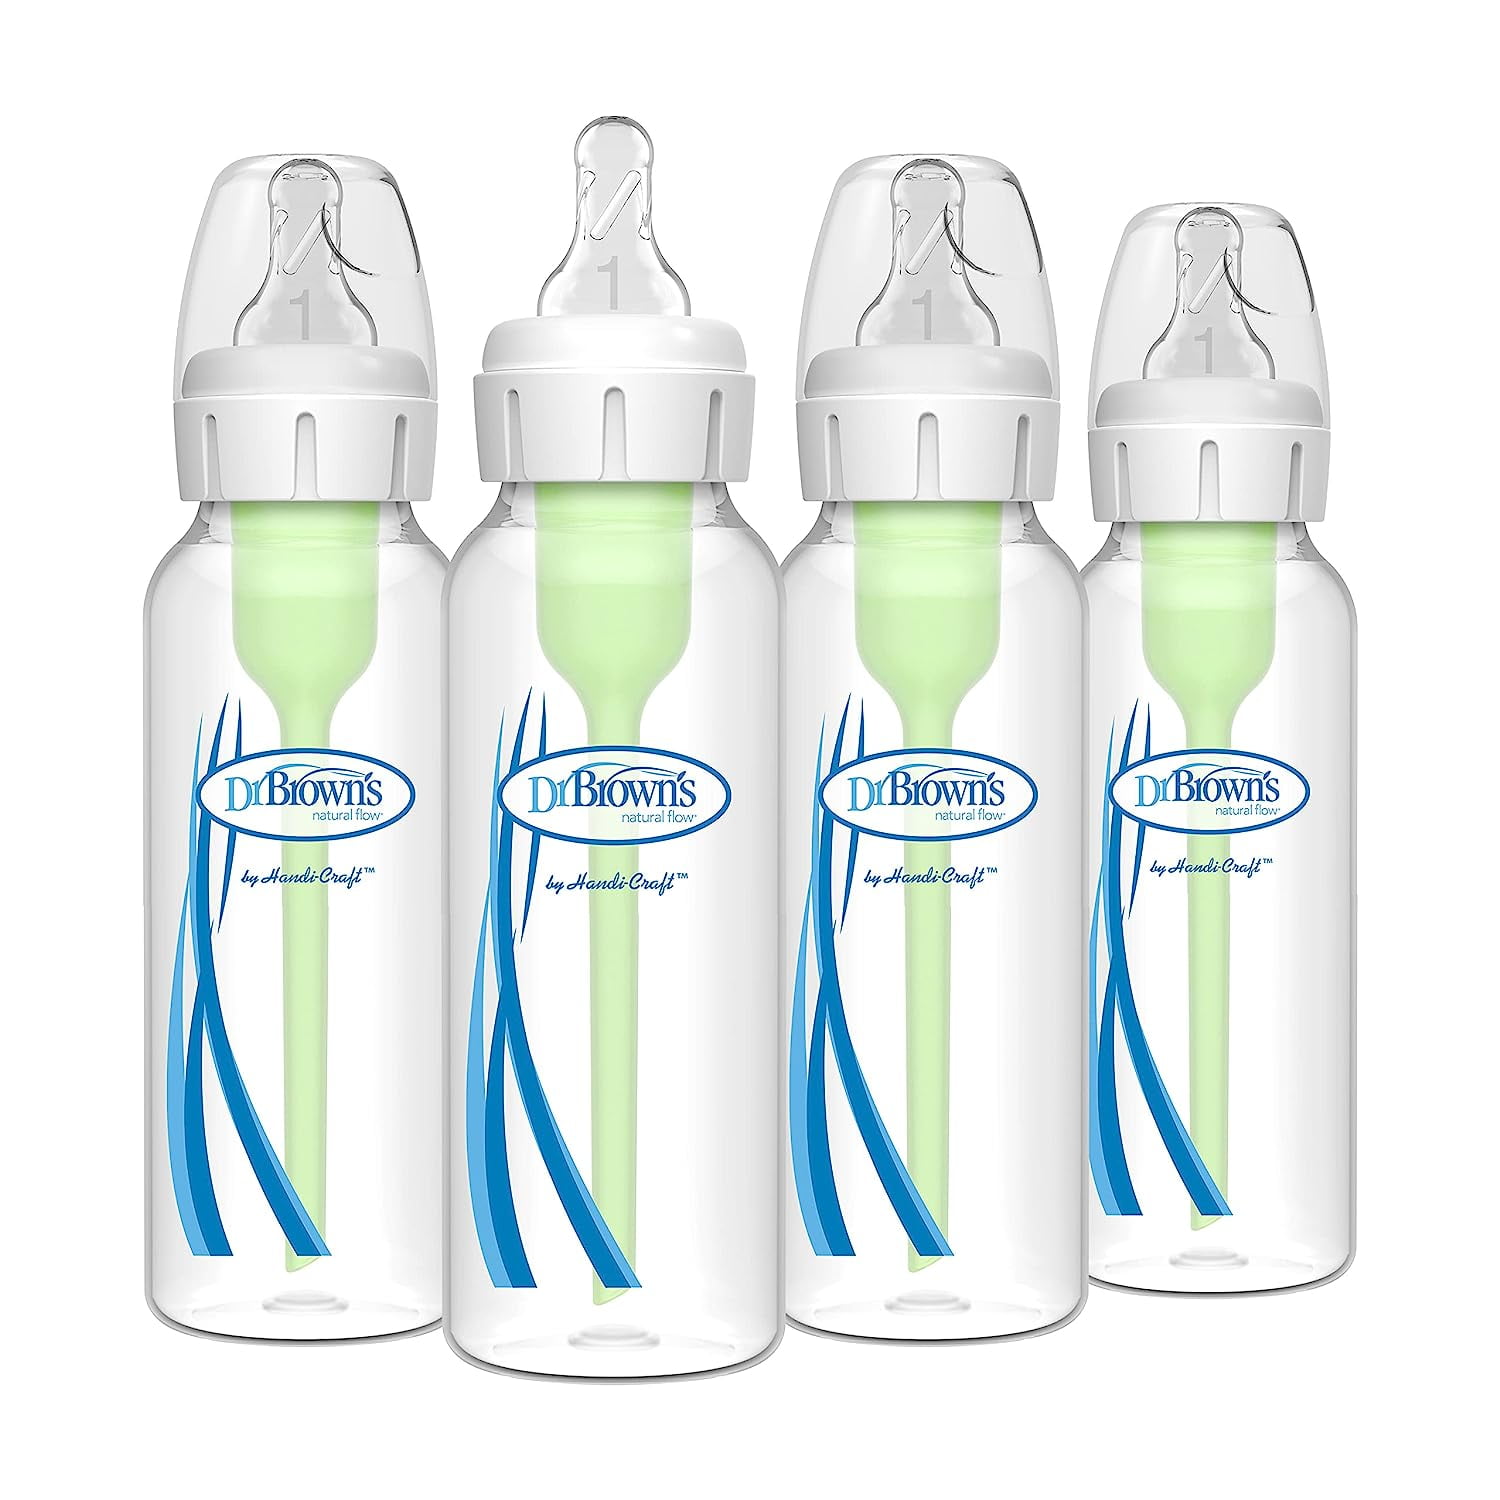 Philips Avent Anti-colic Baby Bottles, 11oz, 3pk, Clear, SCY106/03 